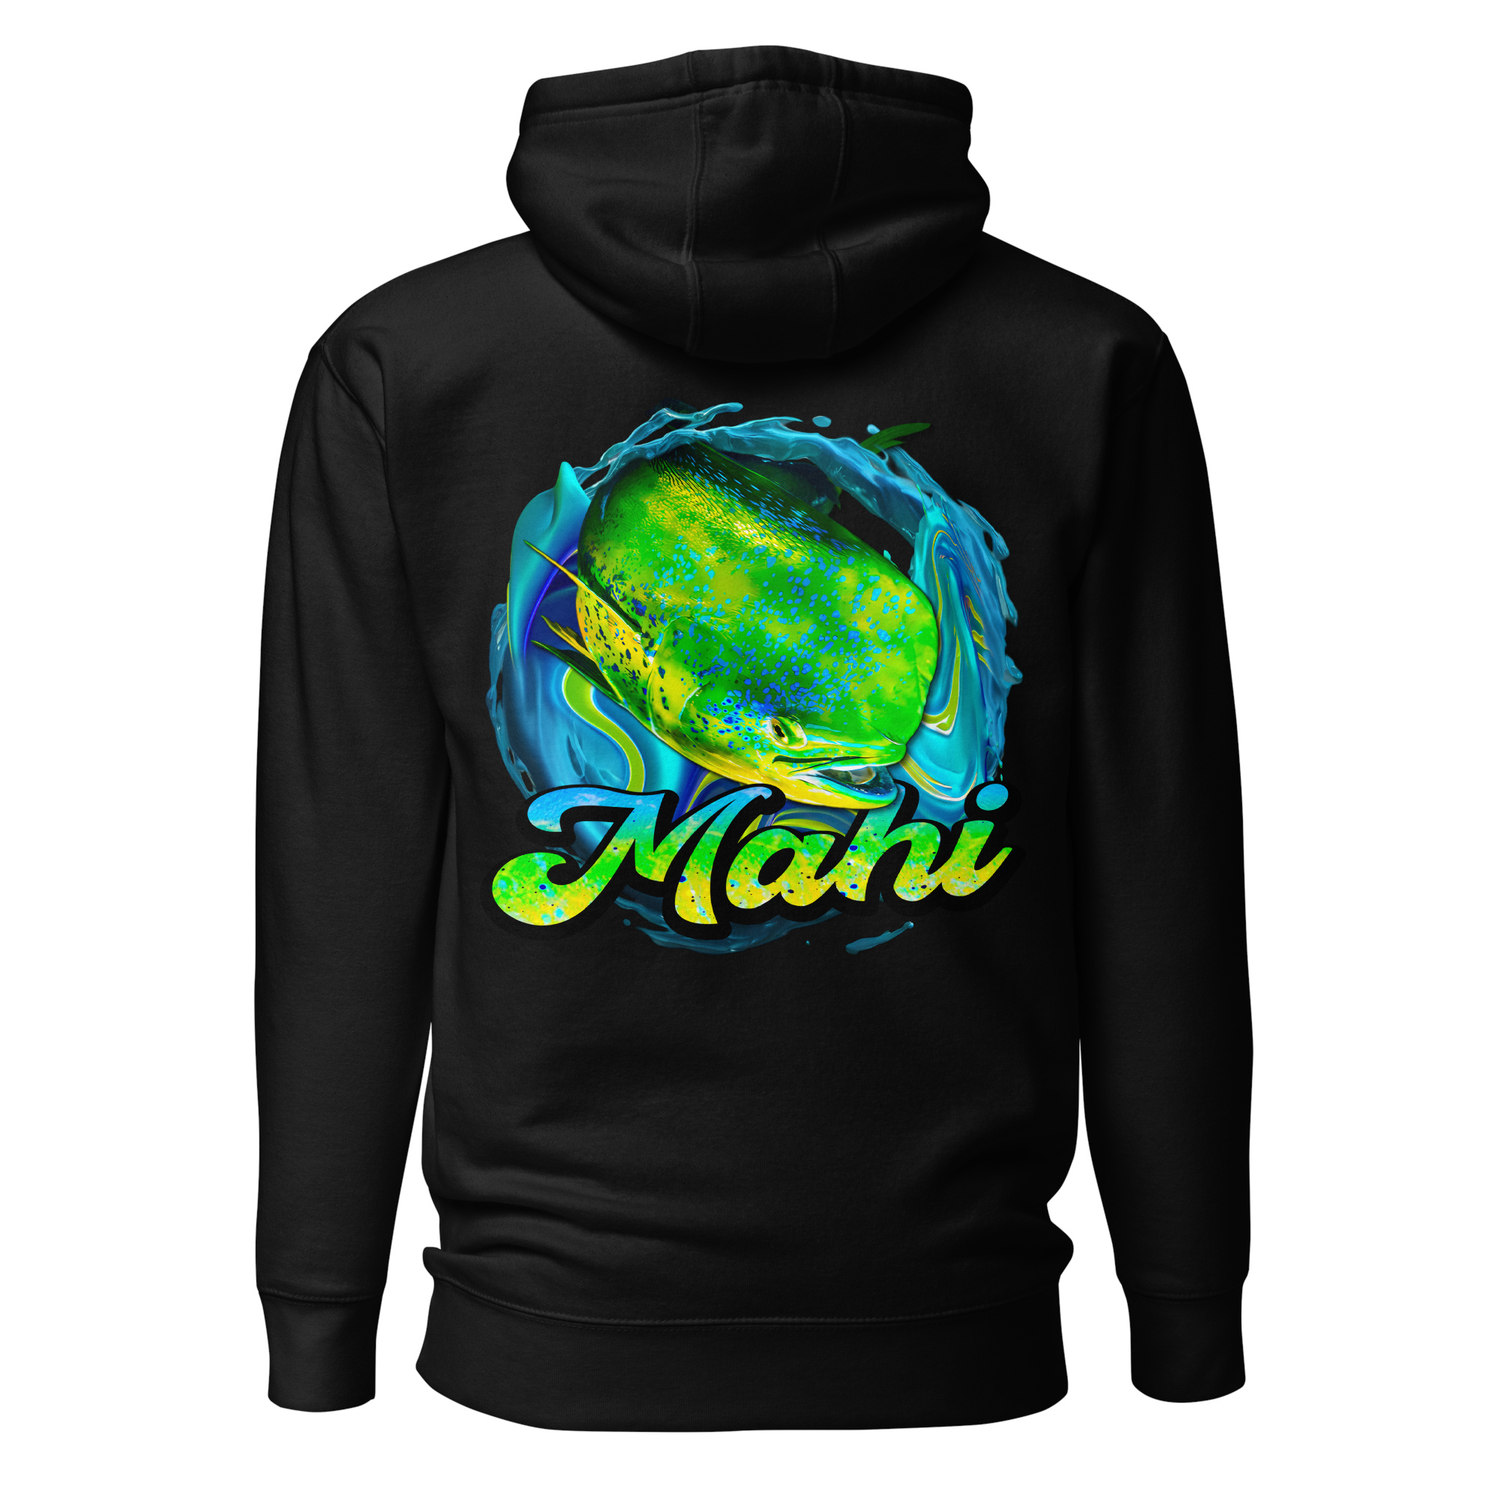 Hoodie Mahi Mahi Fishing Hooded Sweatshirt For Fishermen by Arczeal Designs